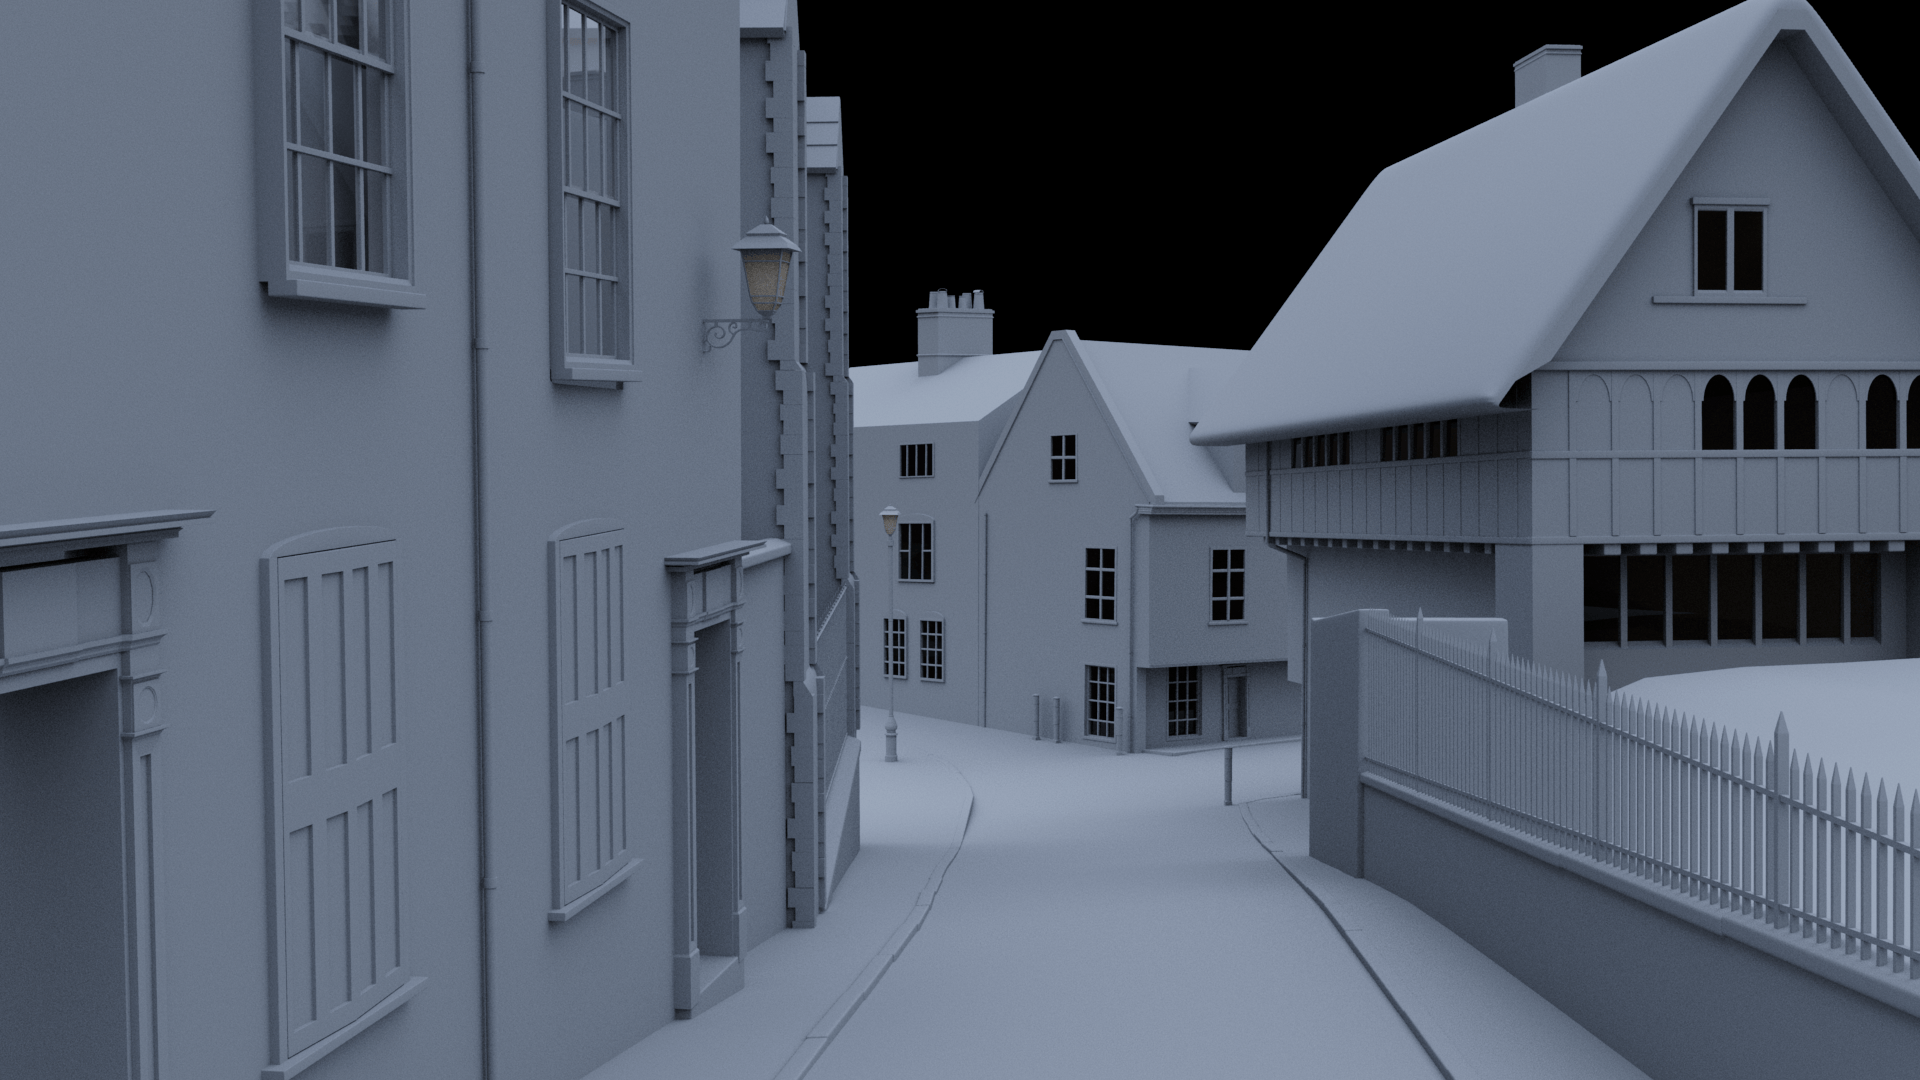 VFX 3D modelling work by Keldon Israel showing the untextured cobbled street of Elm Hill